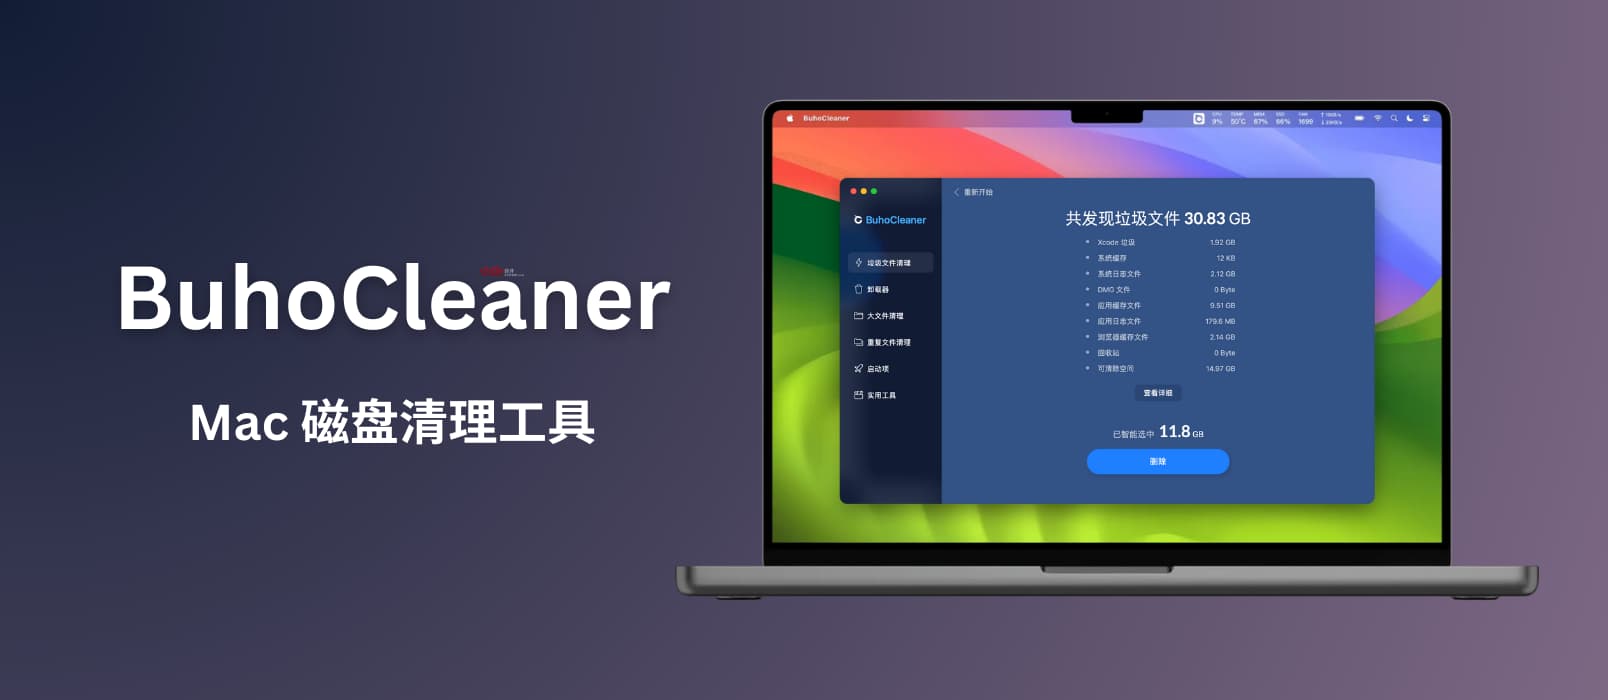 BuhoCleaner - 简洁优雅的 Mac 磁盘清理工具 7